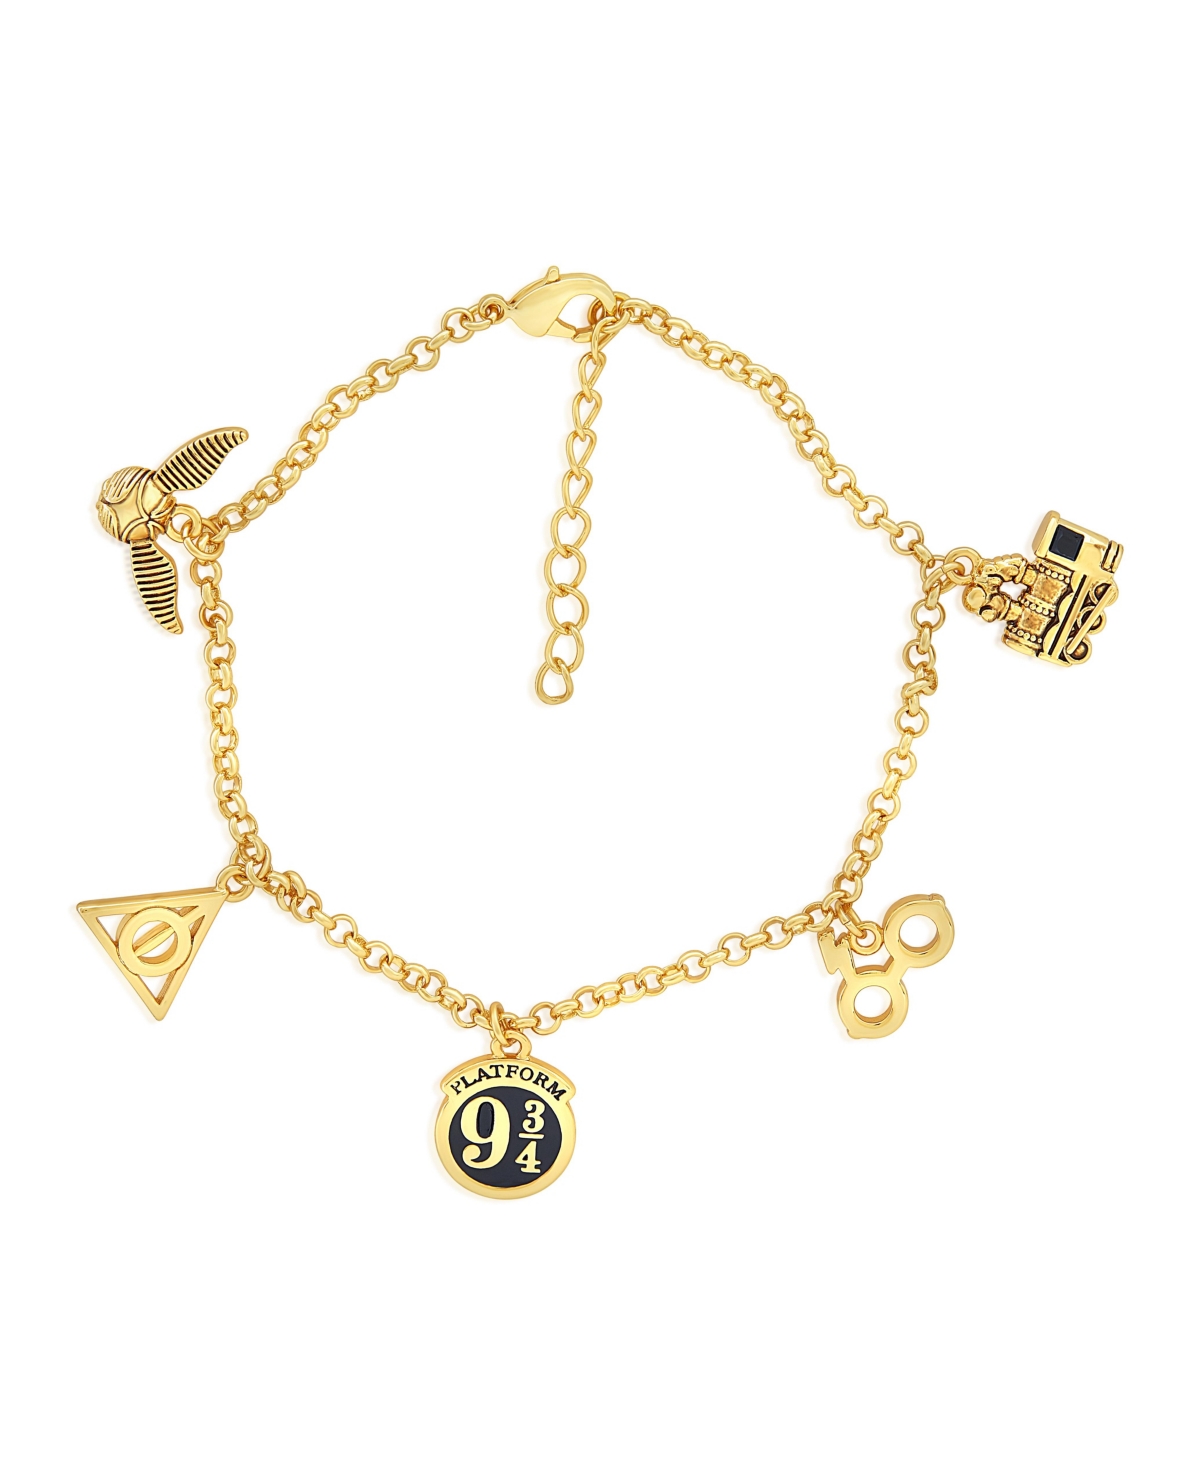 Womens Charm Bracelets, Hogwarts Express - 7'' Chain - Gold tone